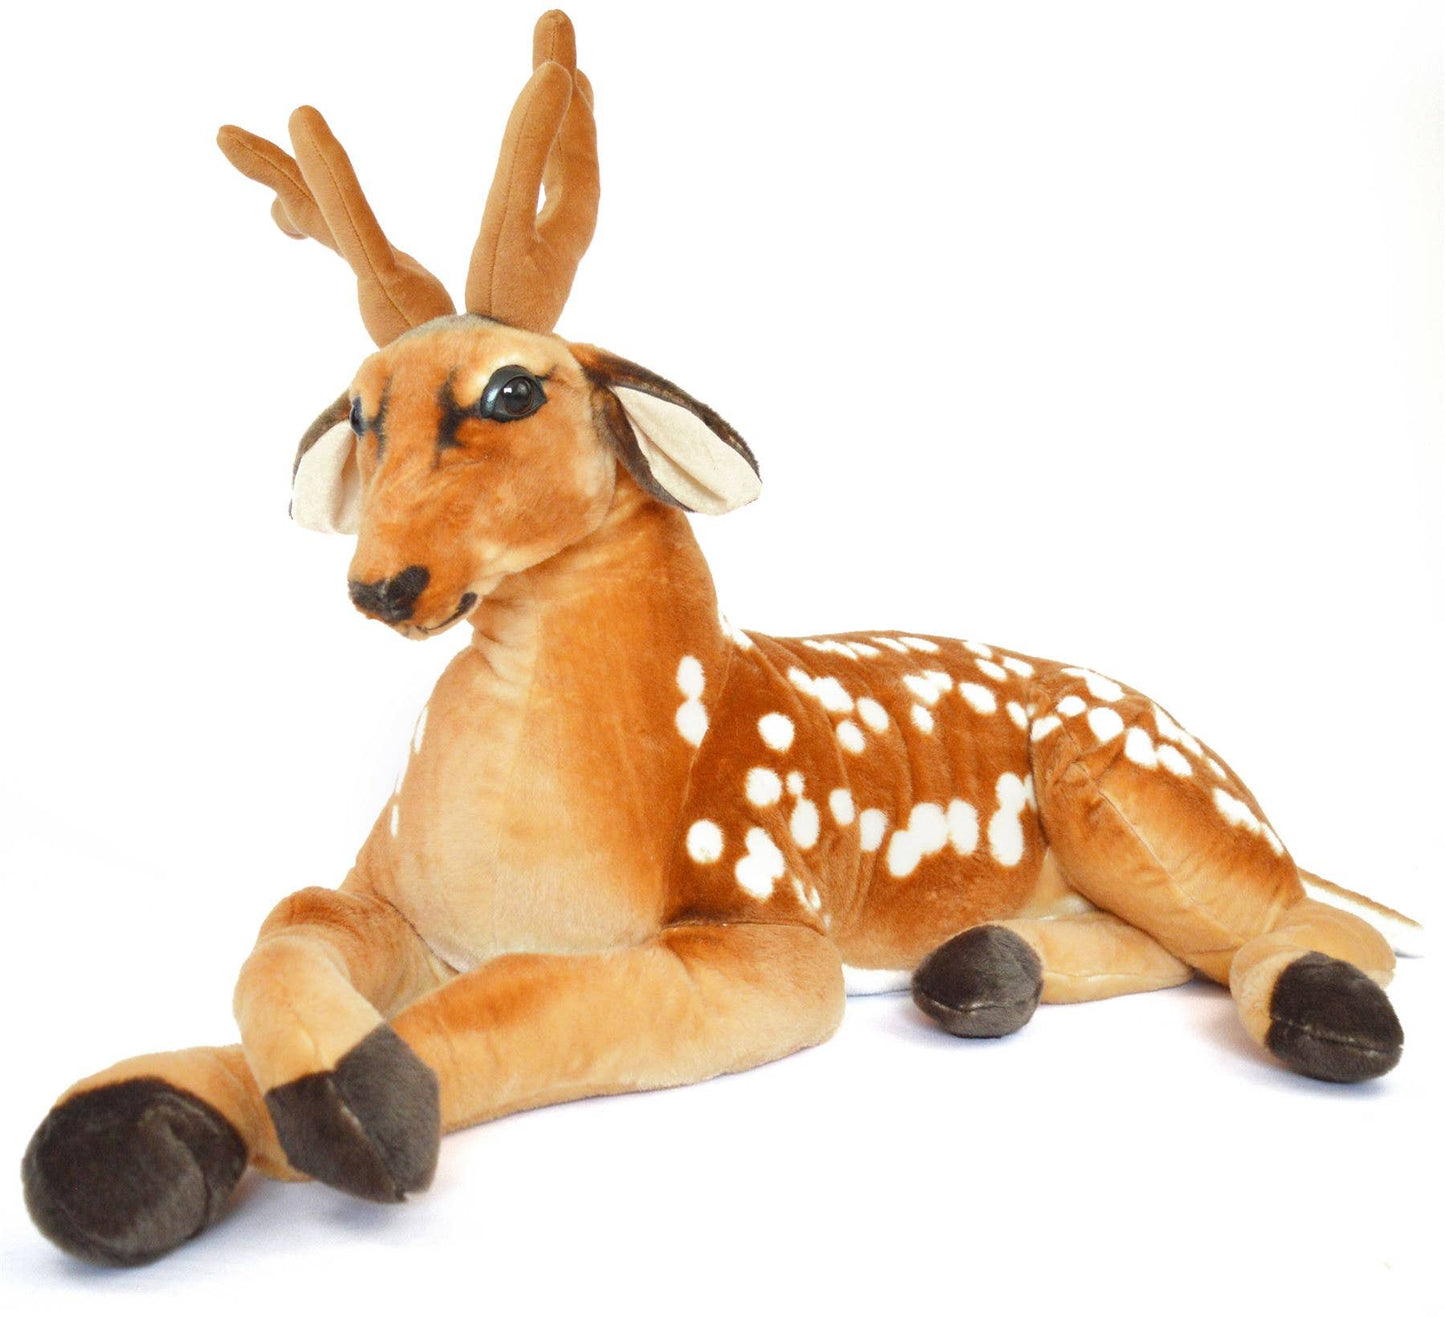 Buck the Deer 3 Foot Big Stuffed Animal Plush